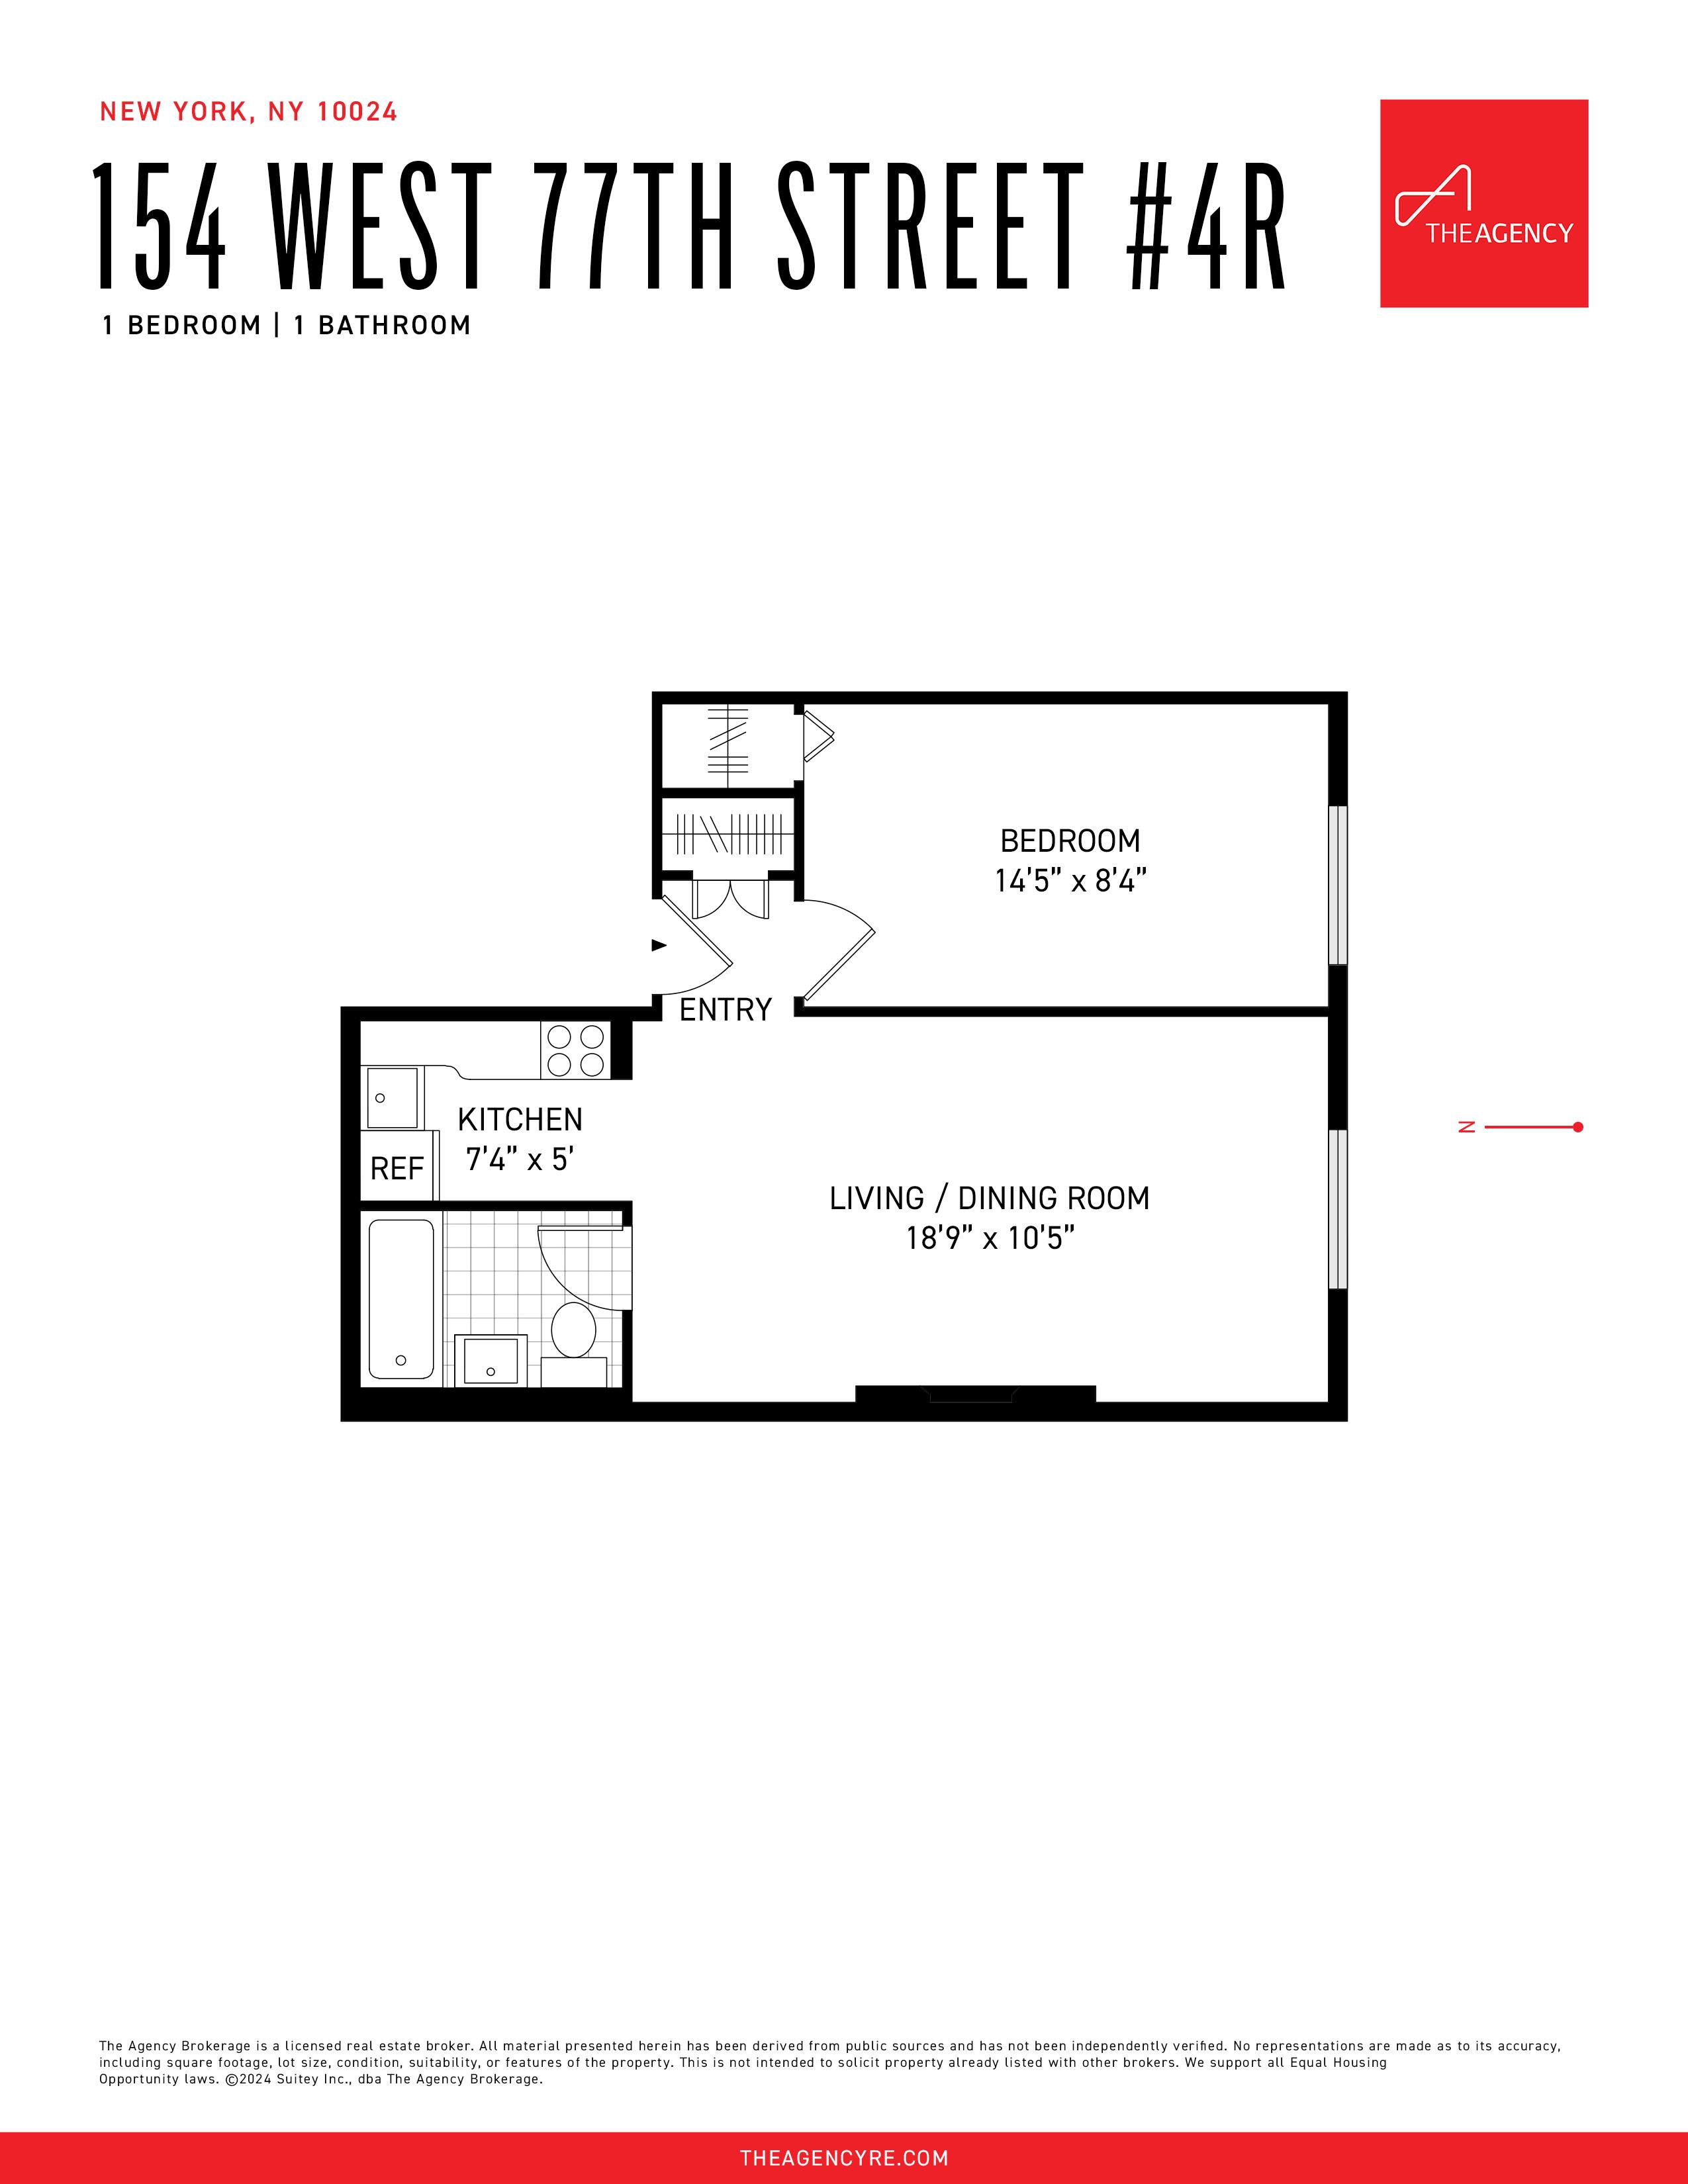 Floorplan for 154 West 77th Street, 4-R